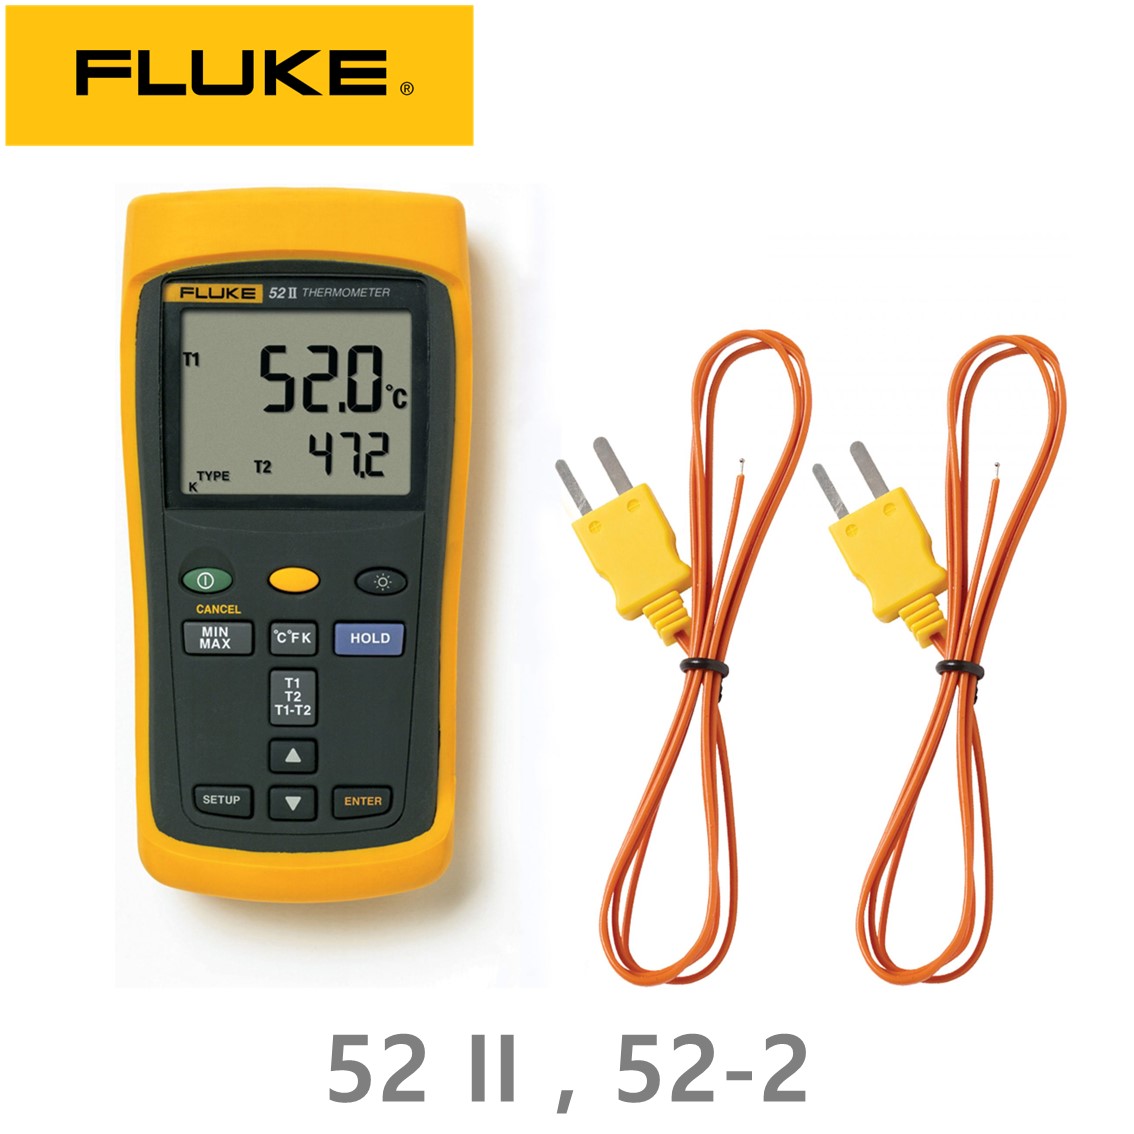 [ FLUKE 52-2 60Hz] 정품 플루크 디지털 온도계 52 II, 접촉식 온도계, 온도미터 (2 채널)